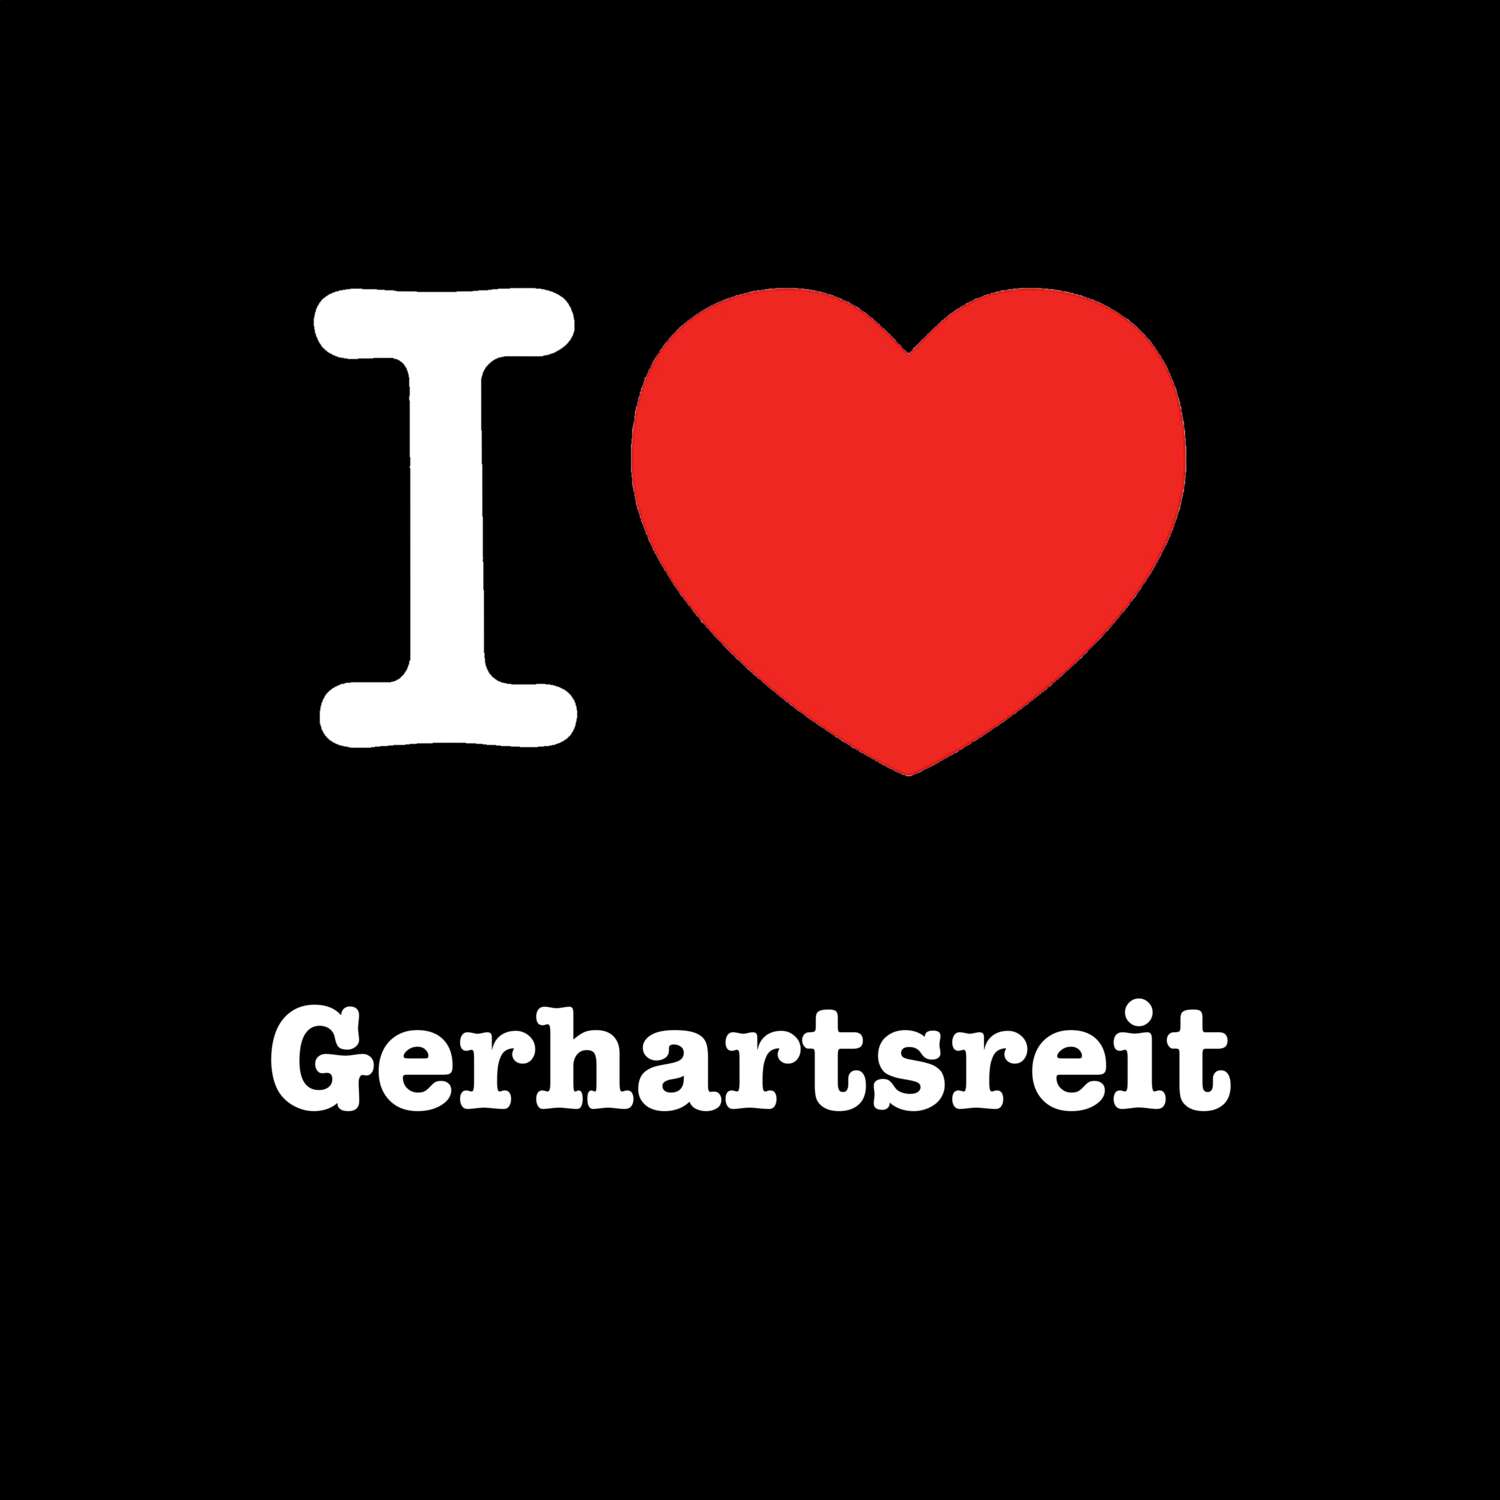 Gerhartsreit T-Shirt »I love«